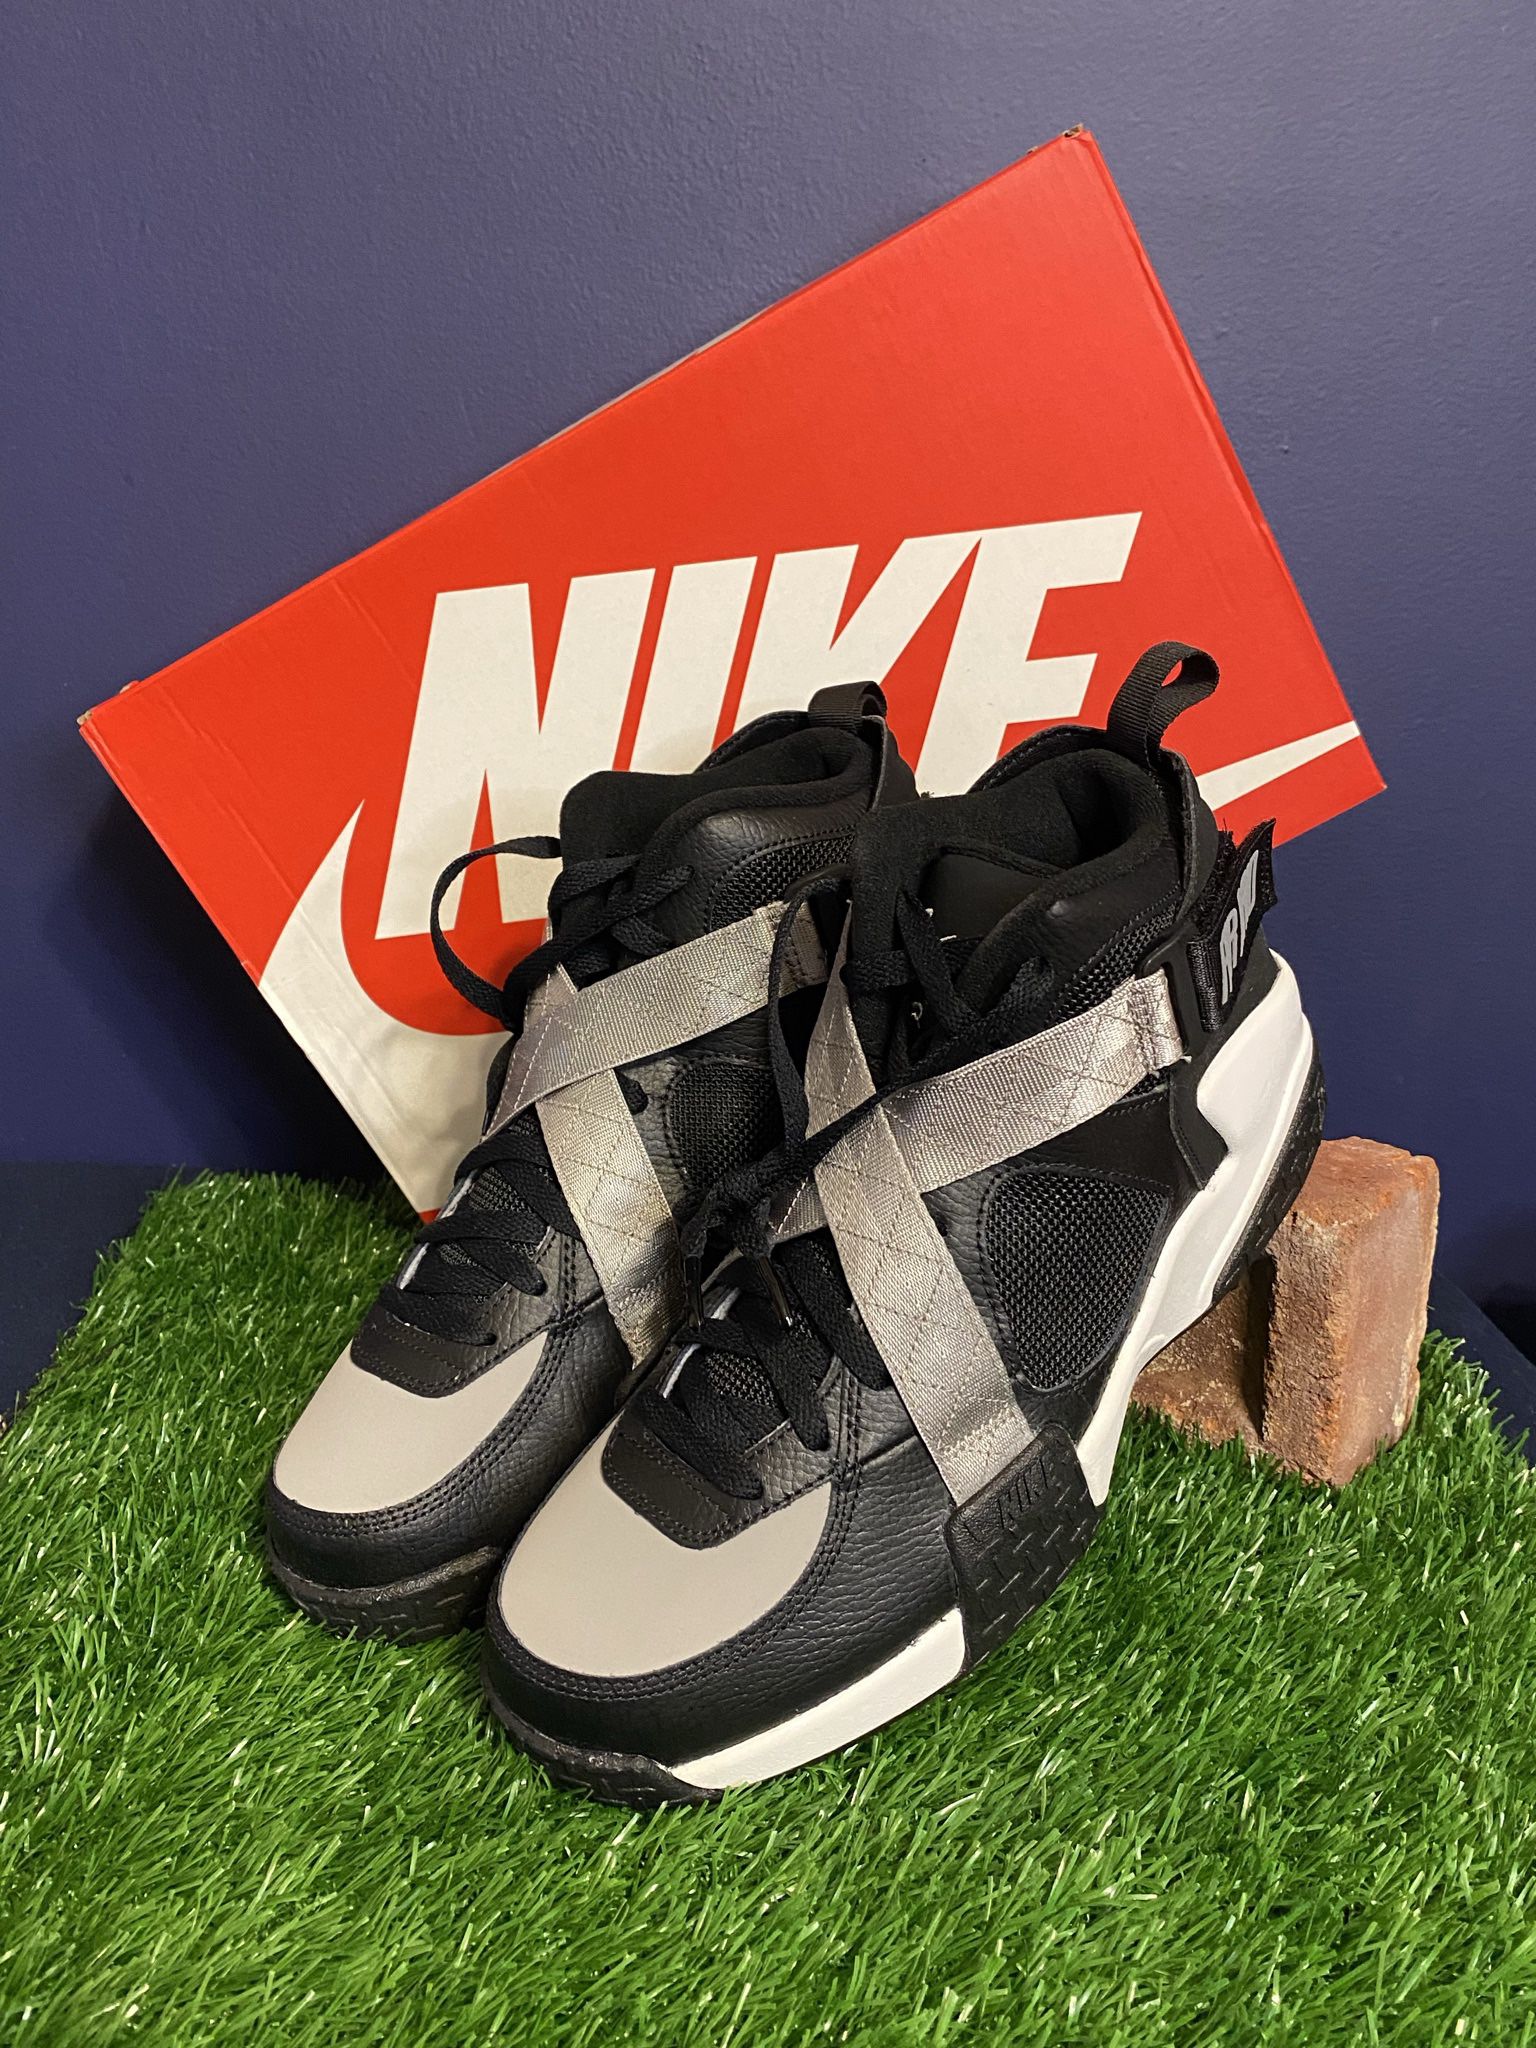 Vintage 1992 Nike Air raid basketball shoes. These